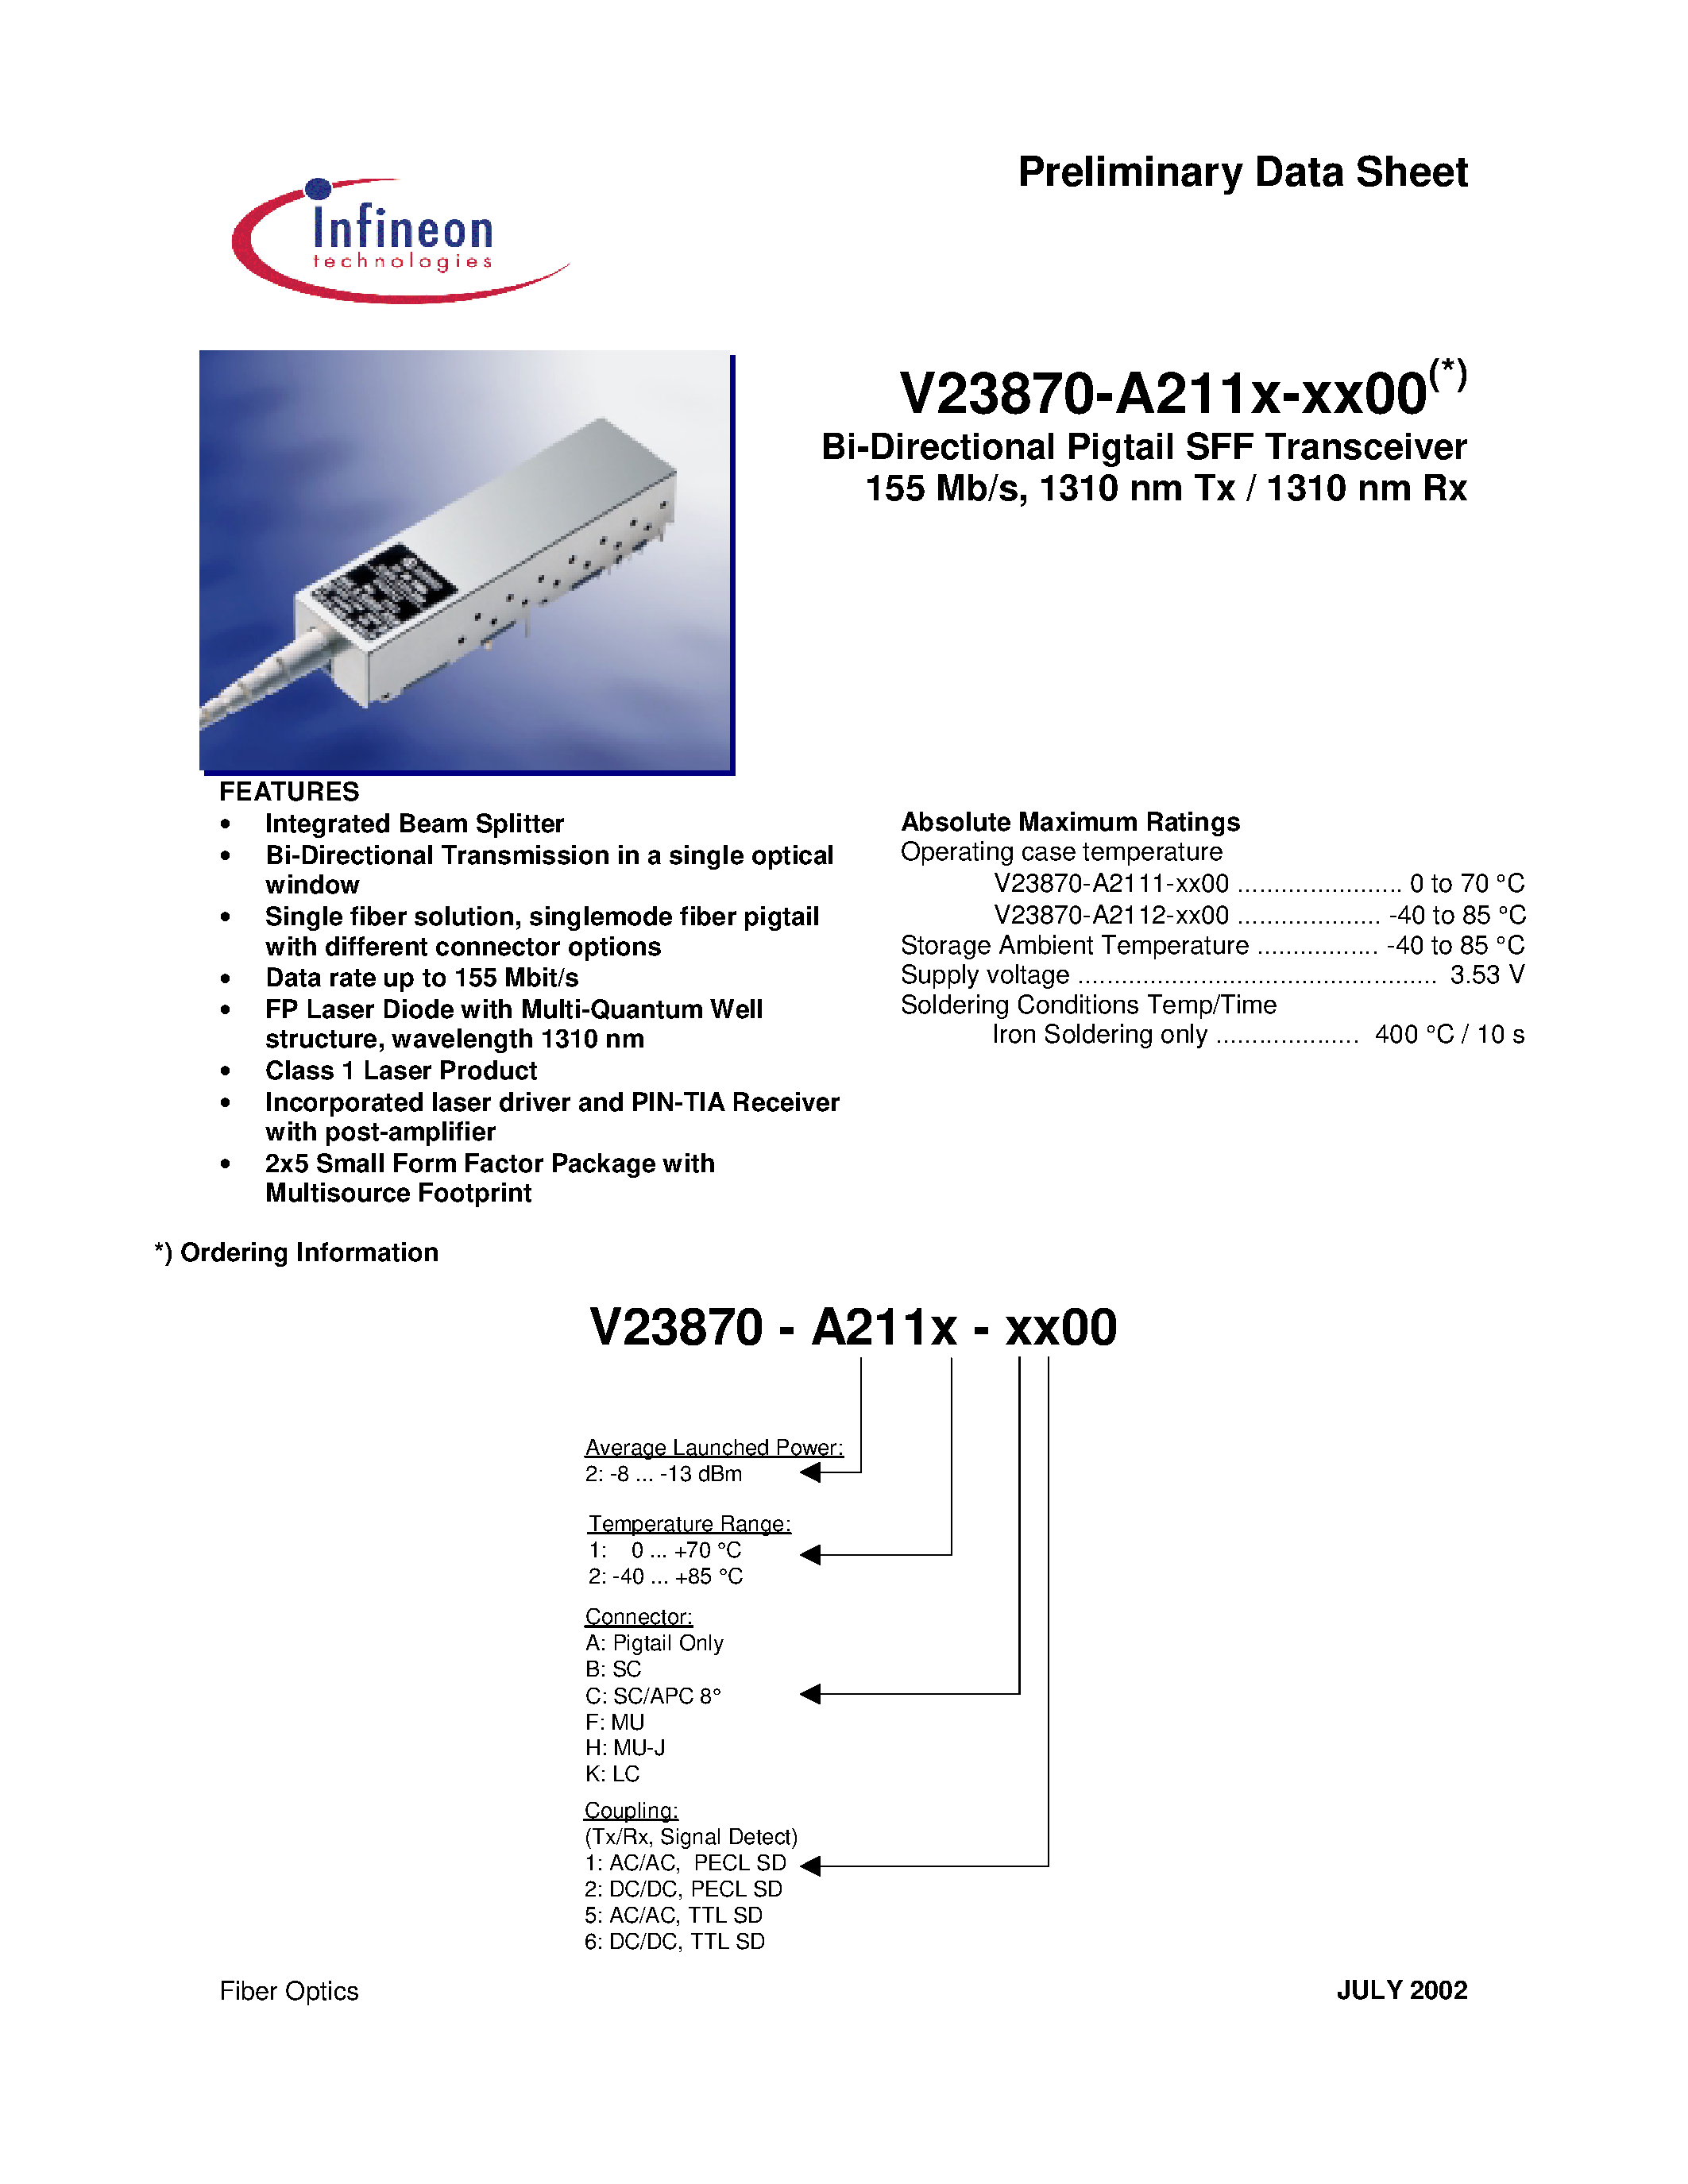 Даташит V23870-A2111-B200 - Bi-Directional Pigtail SFF Transceiver 155 Mb/s/ 1310 nm Tx / 1310 nm Rx страница 1